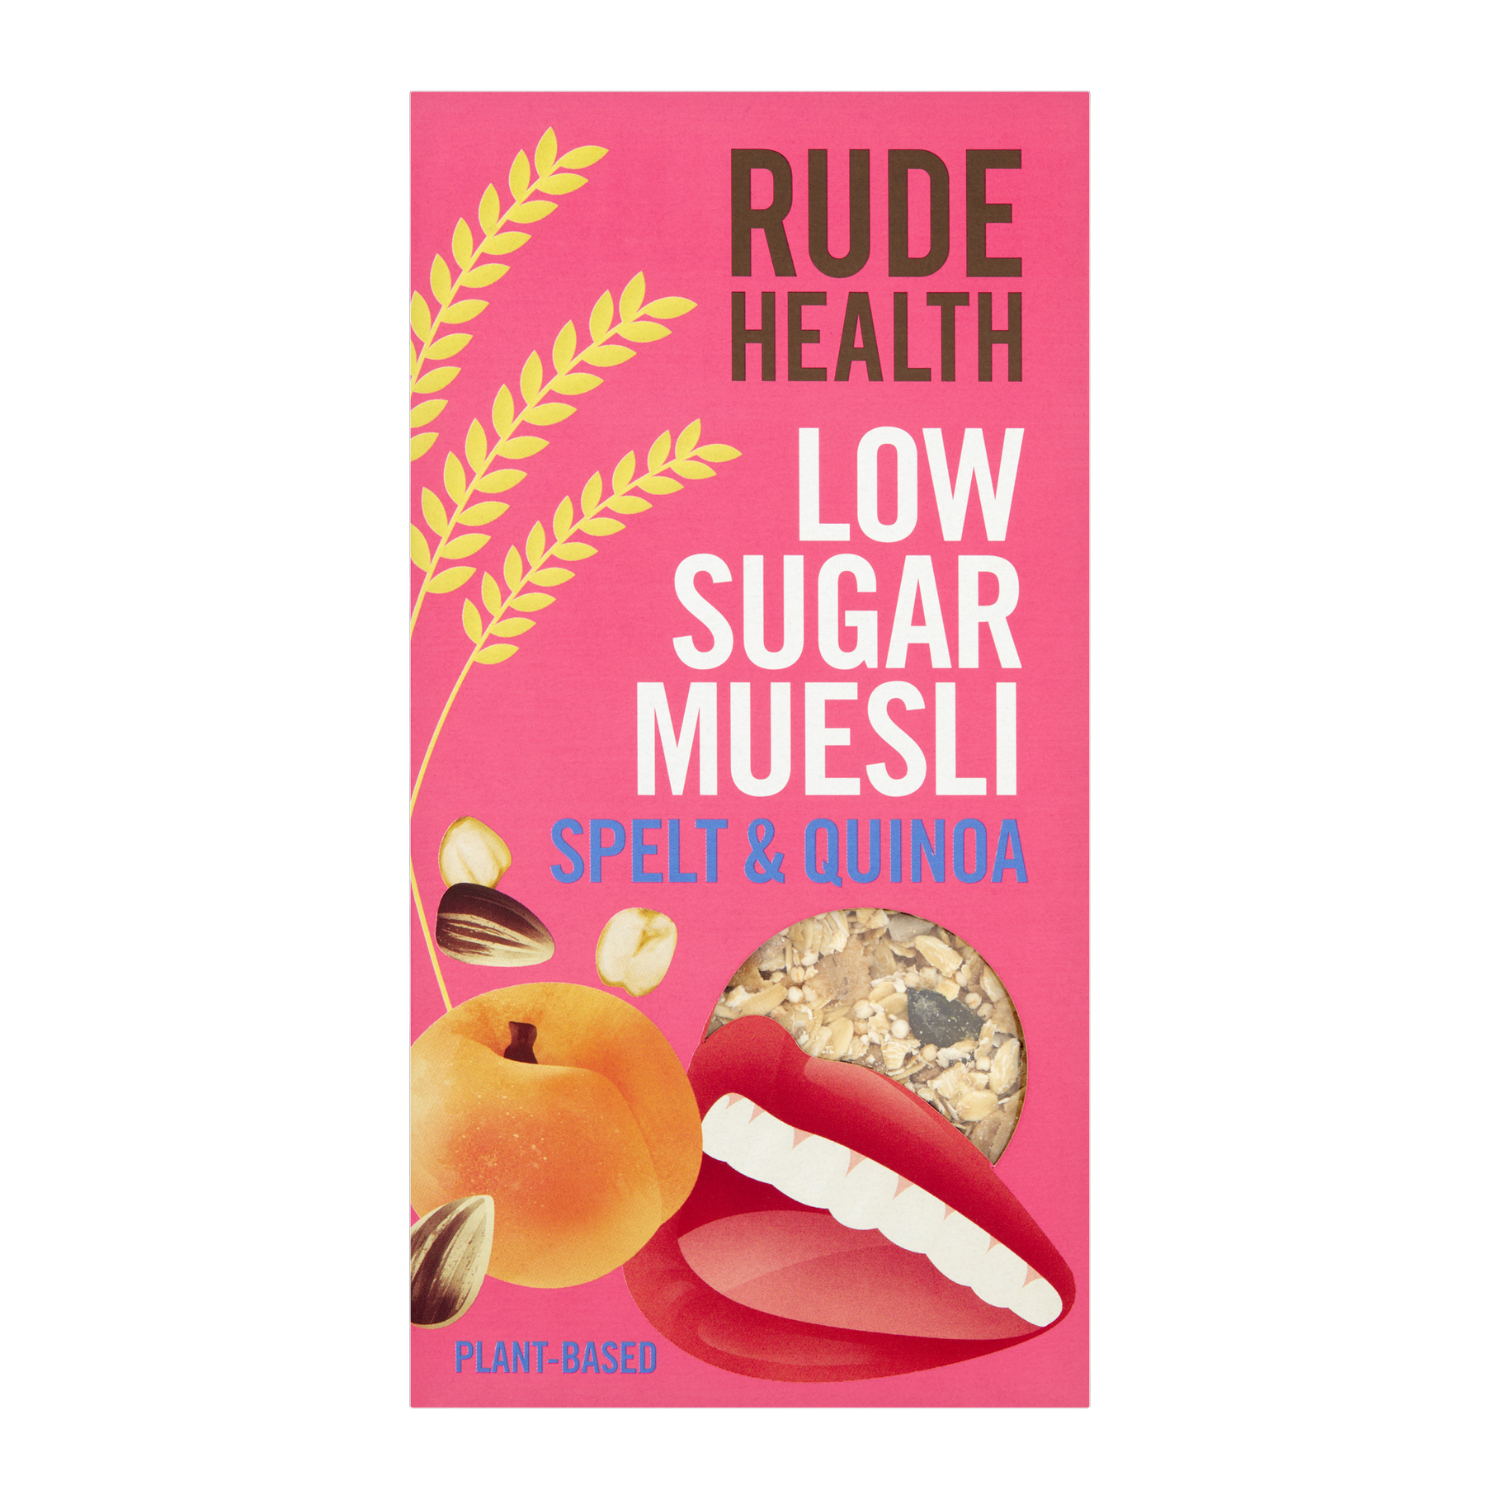 Rude Health Low Sugar Muesli - Spelt & Quinoa, 400g.